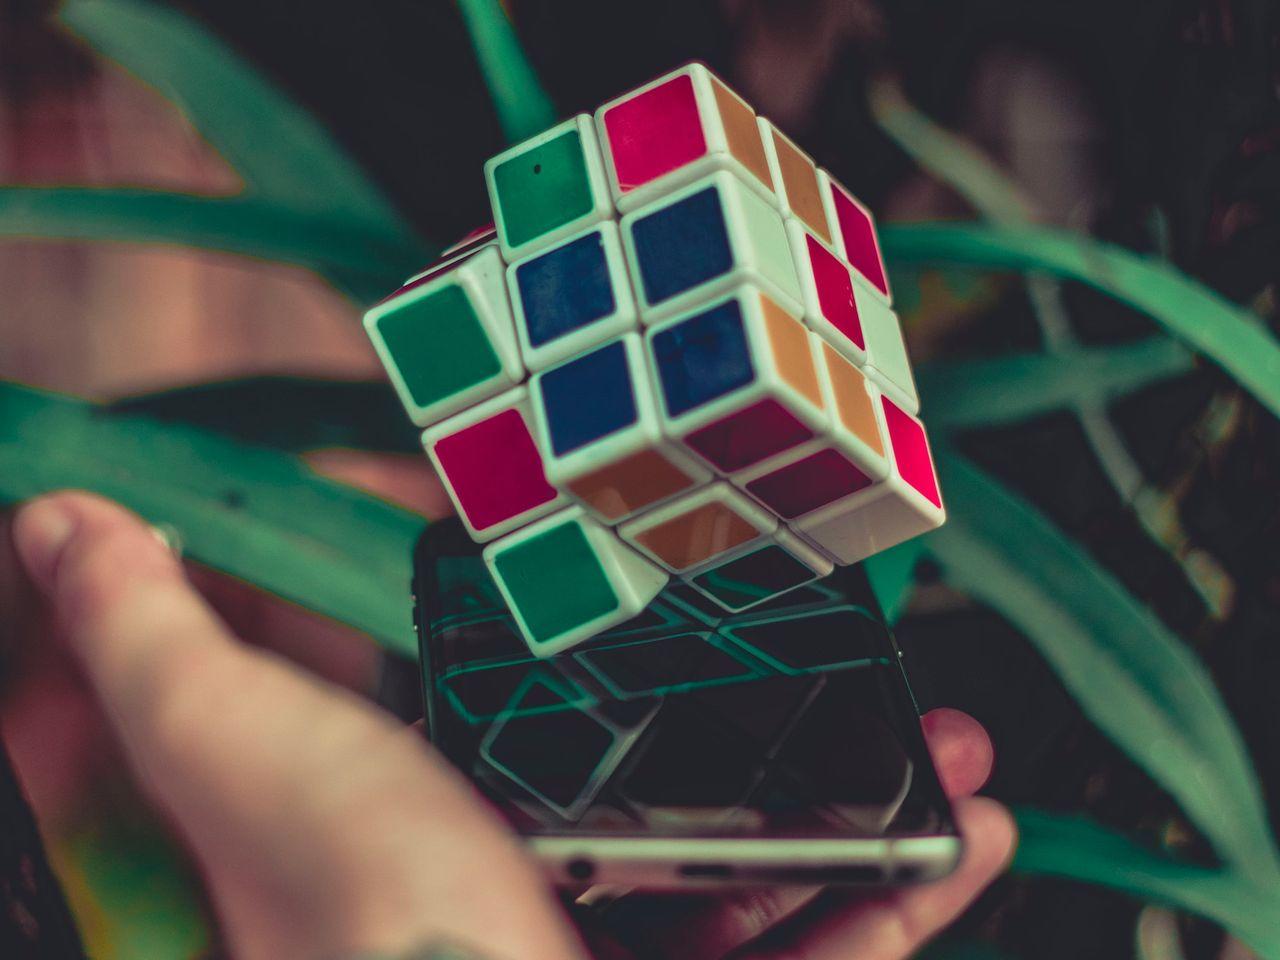 3 x 3 Rubik's cube on smatphone